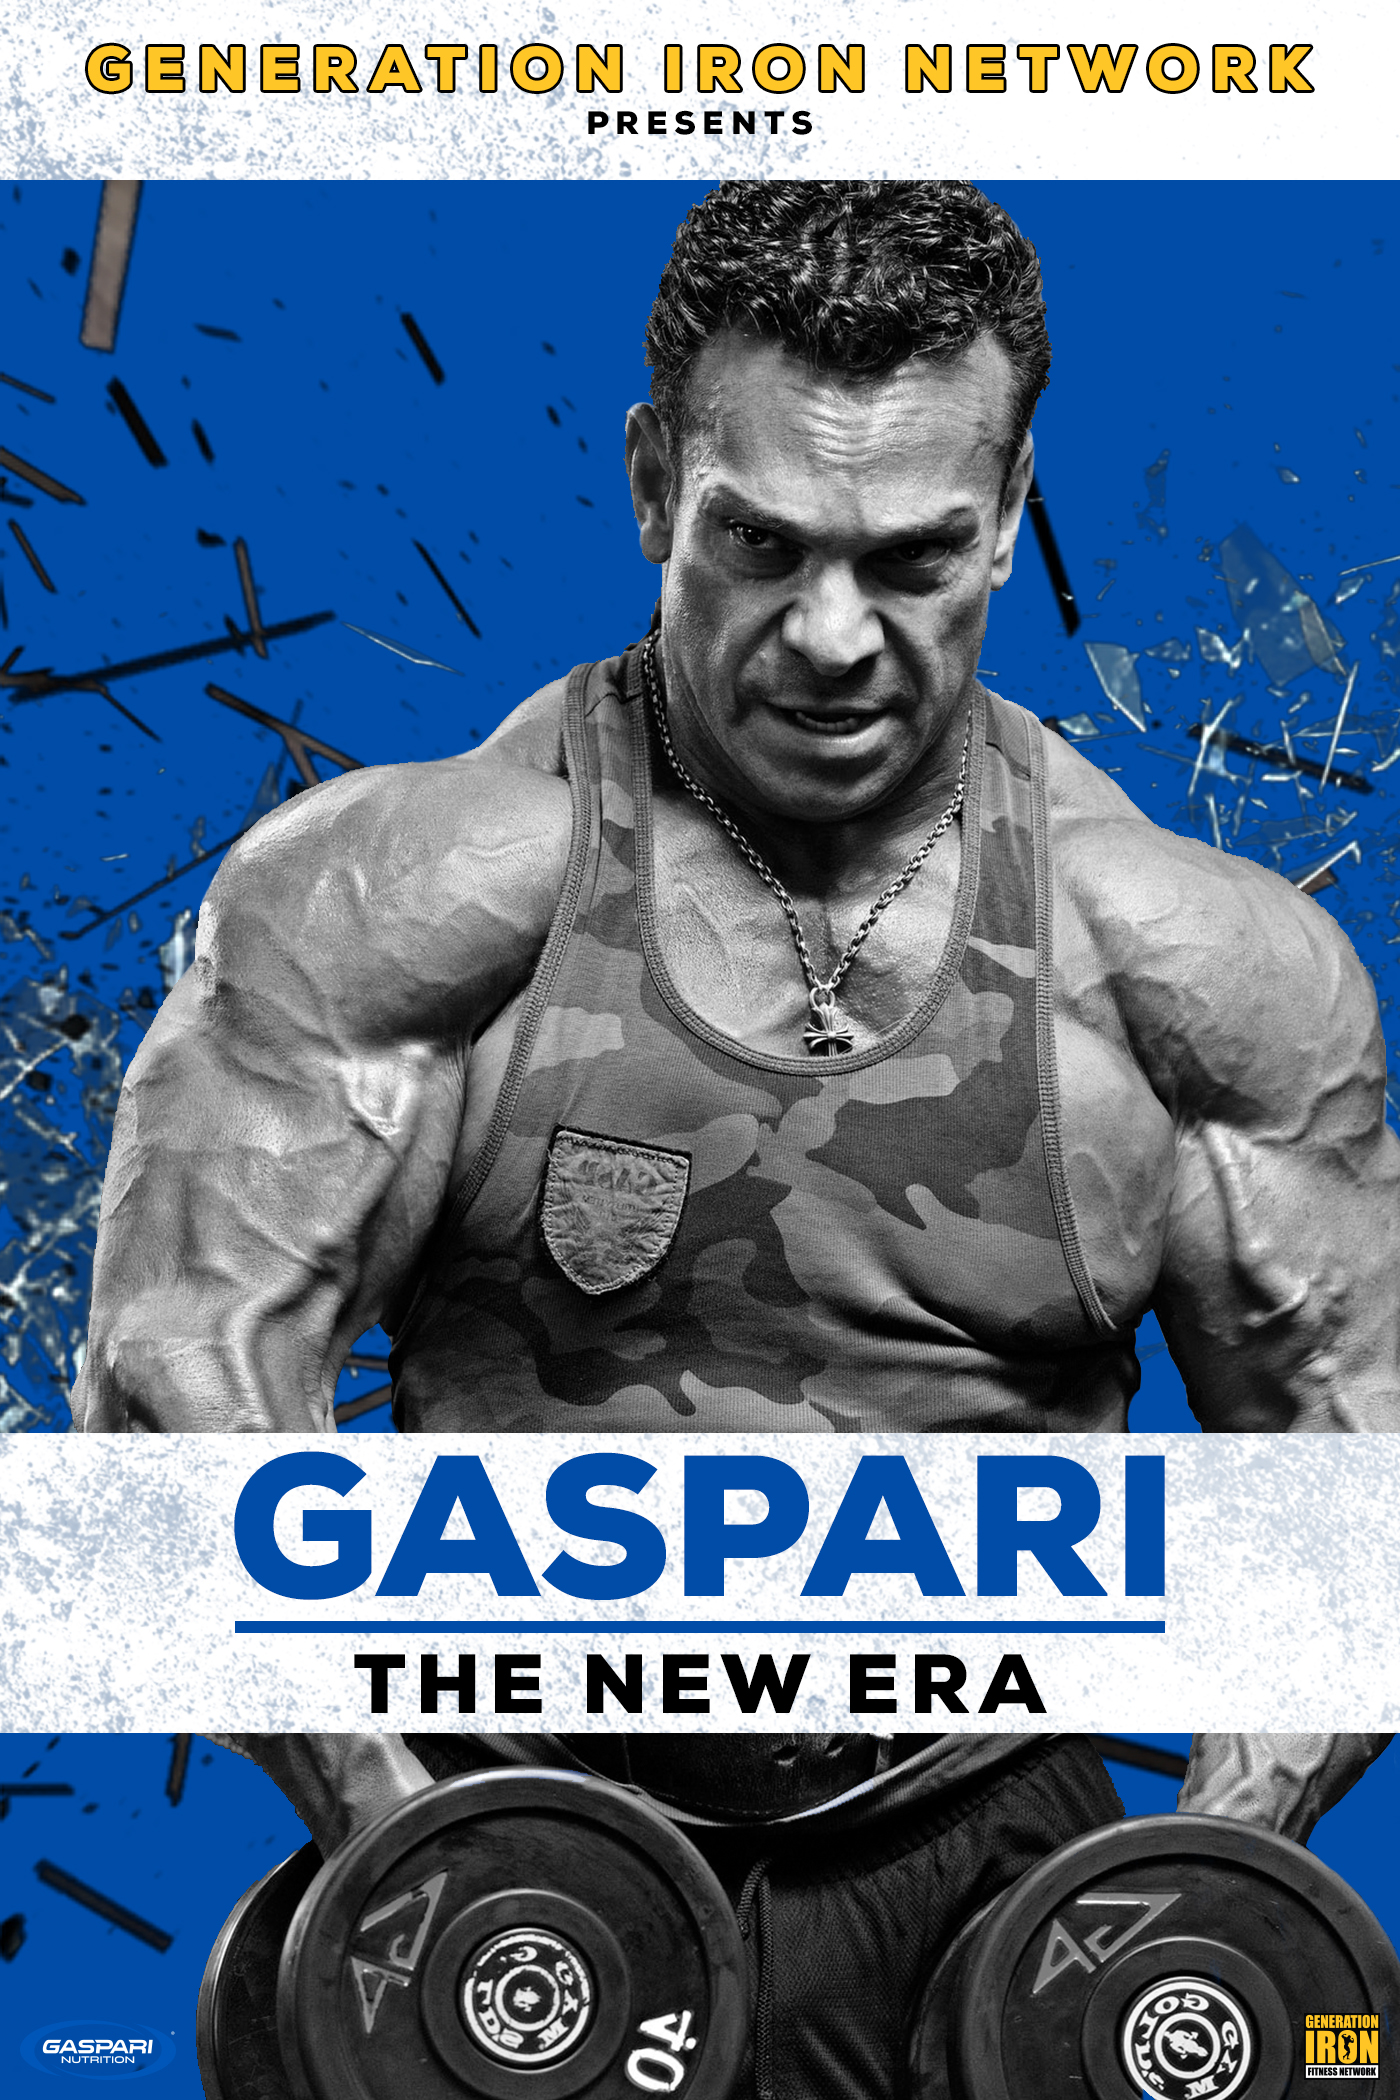 Rich Gaspari New Era Generation Iron